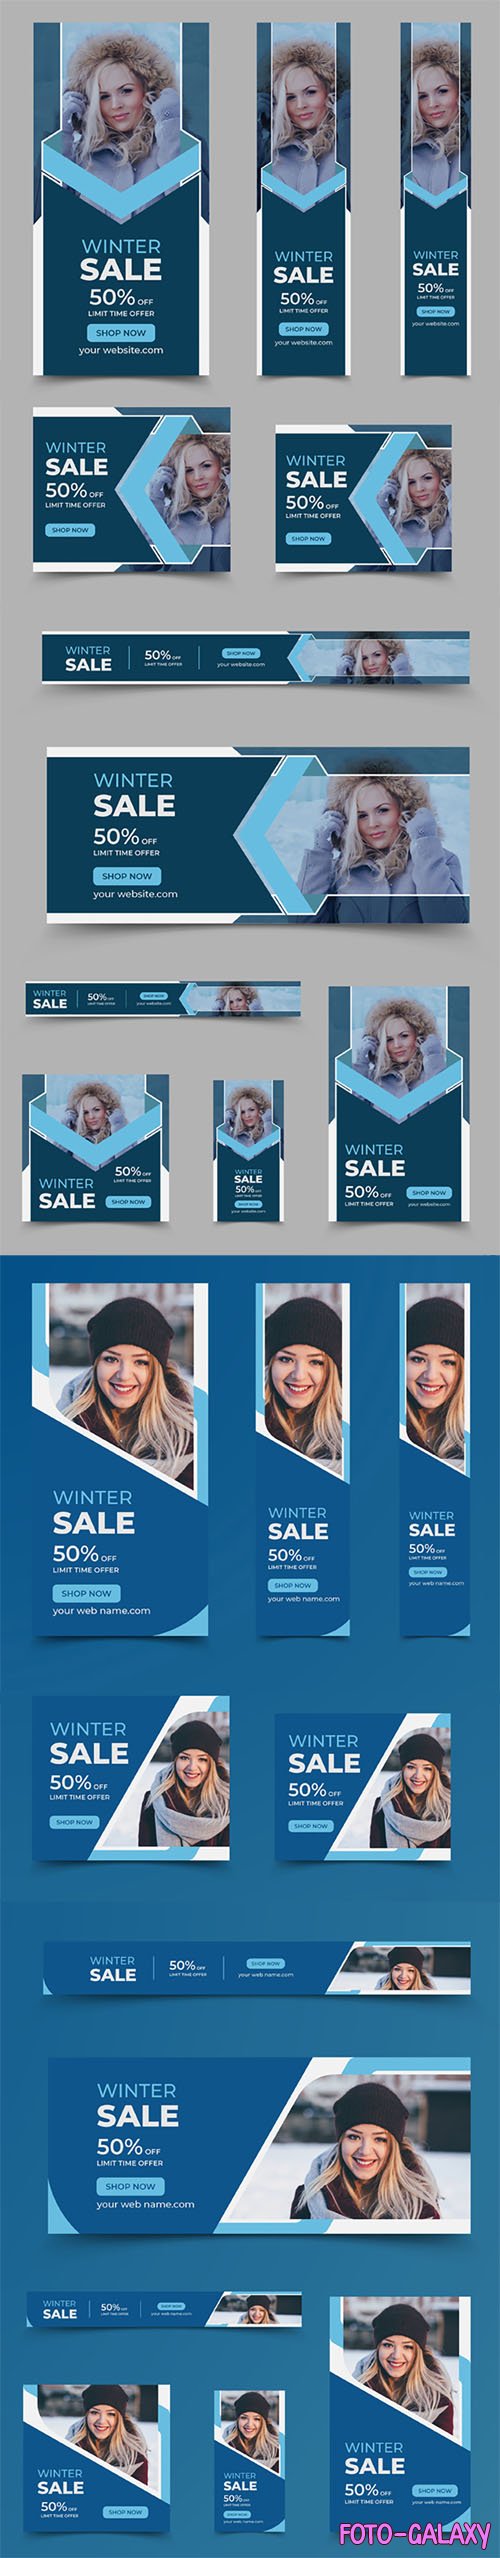 20+ Winter Sales Web Banners Design Vector Templates